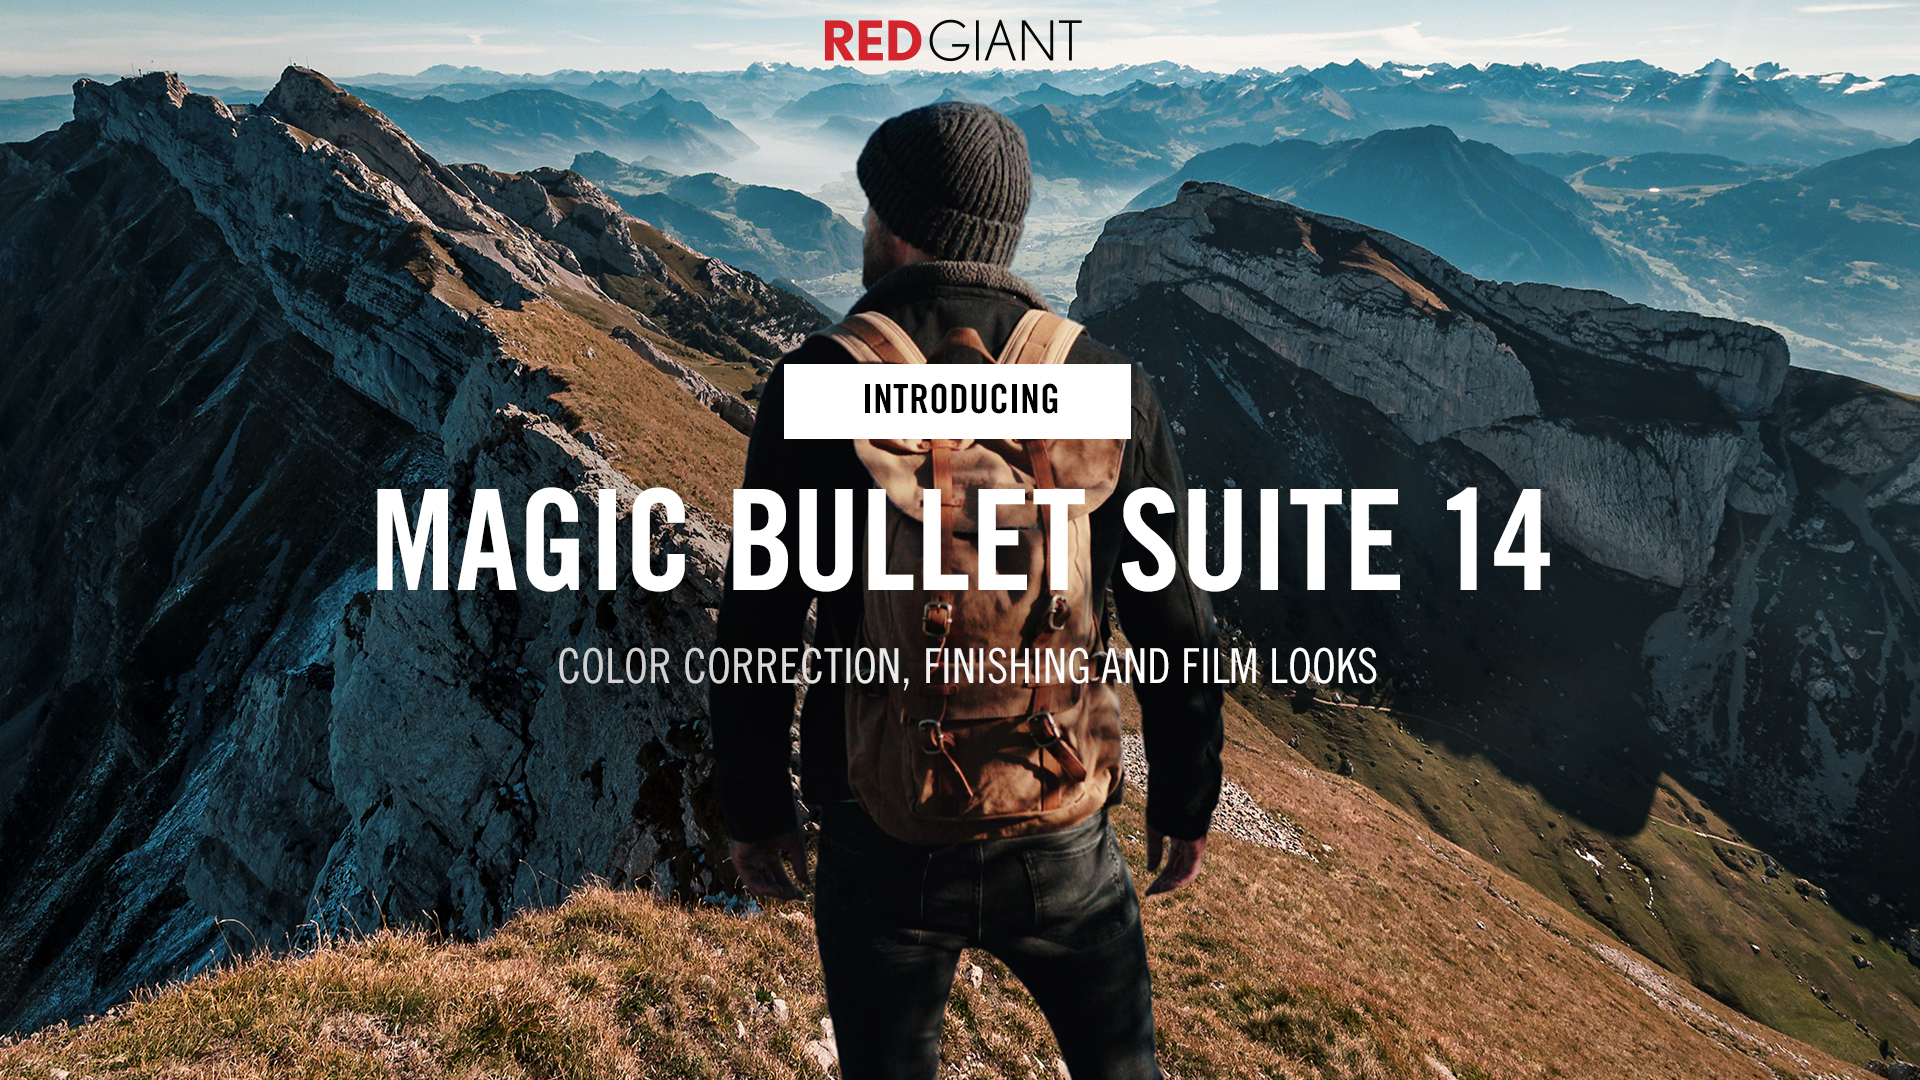 Magic bullet suite. Red giant Magic Bullet. Red giant Magic Bullet Suite. Magic Bullet Suite 13.